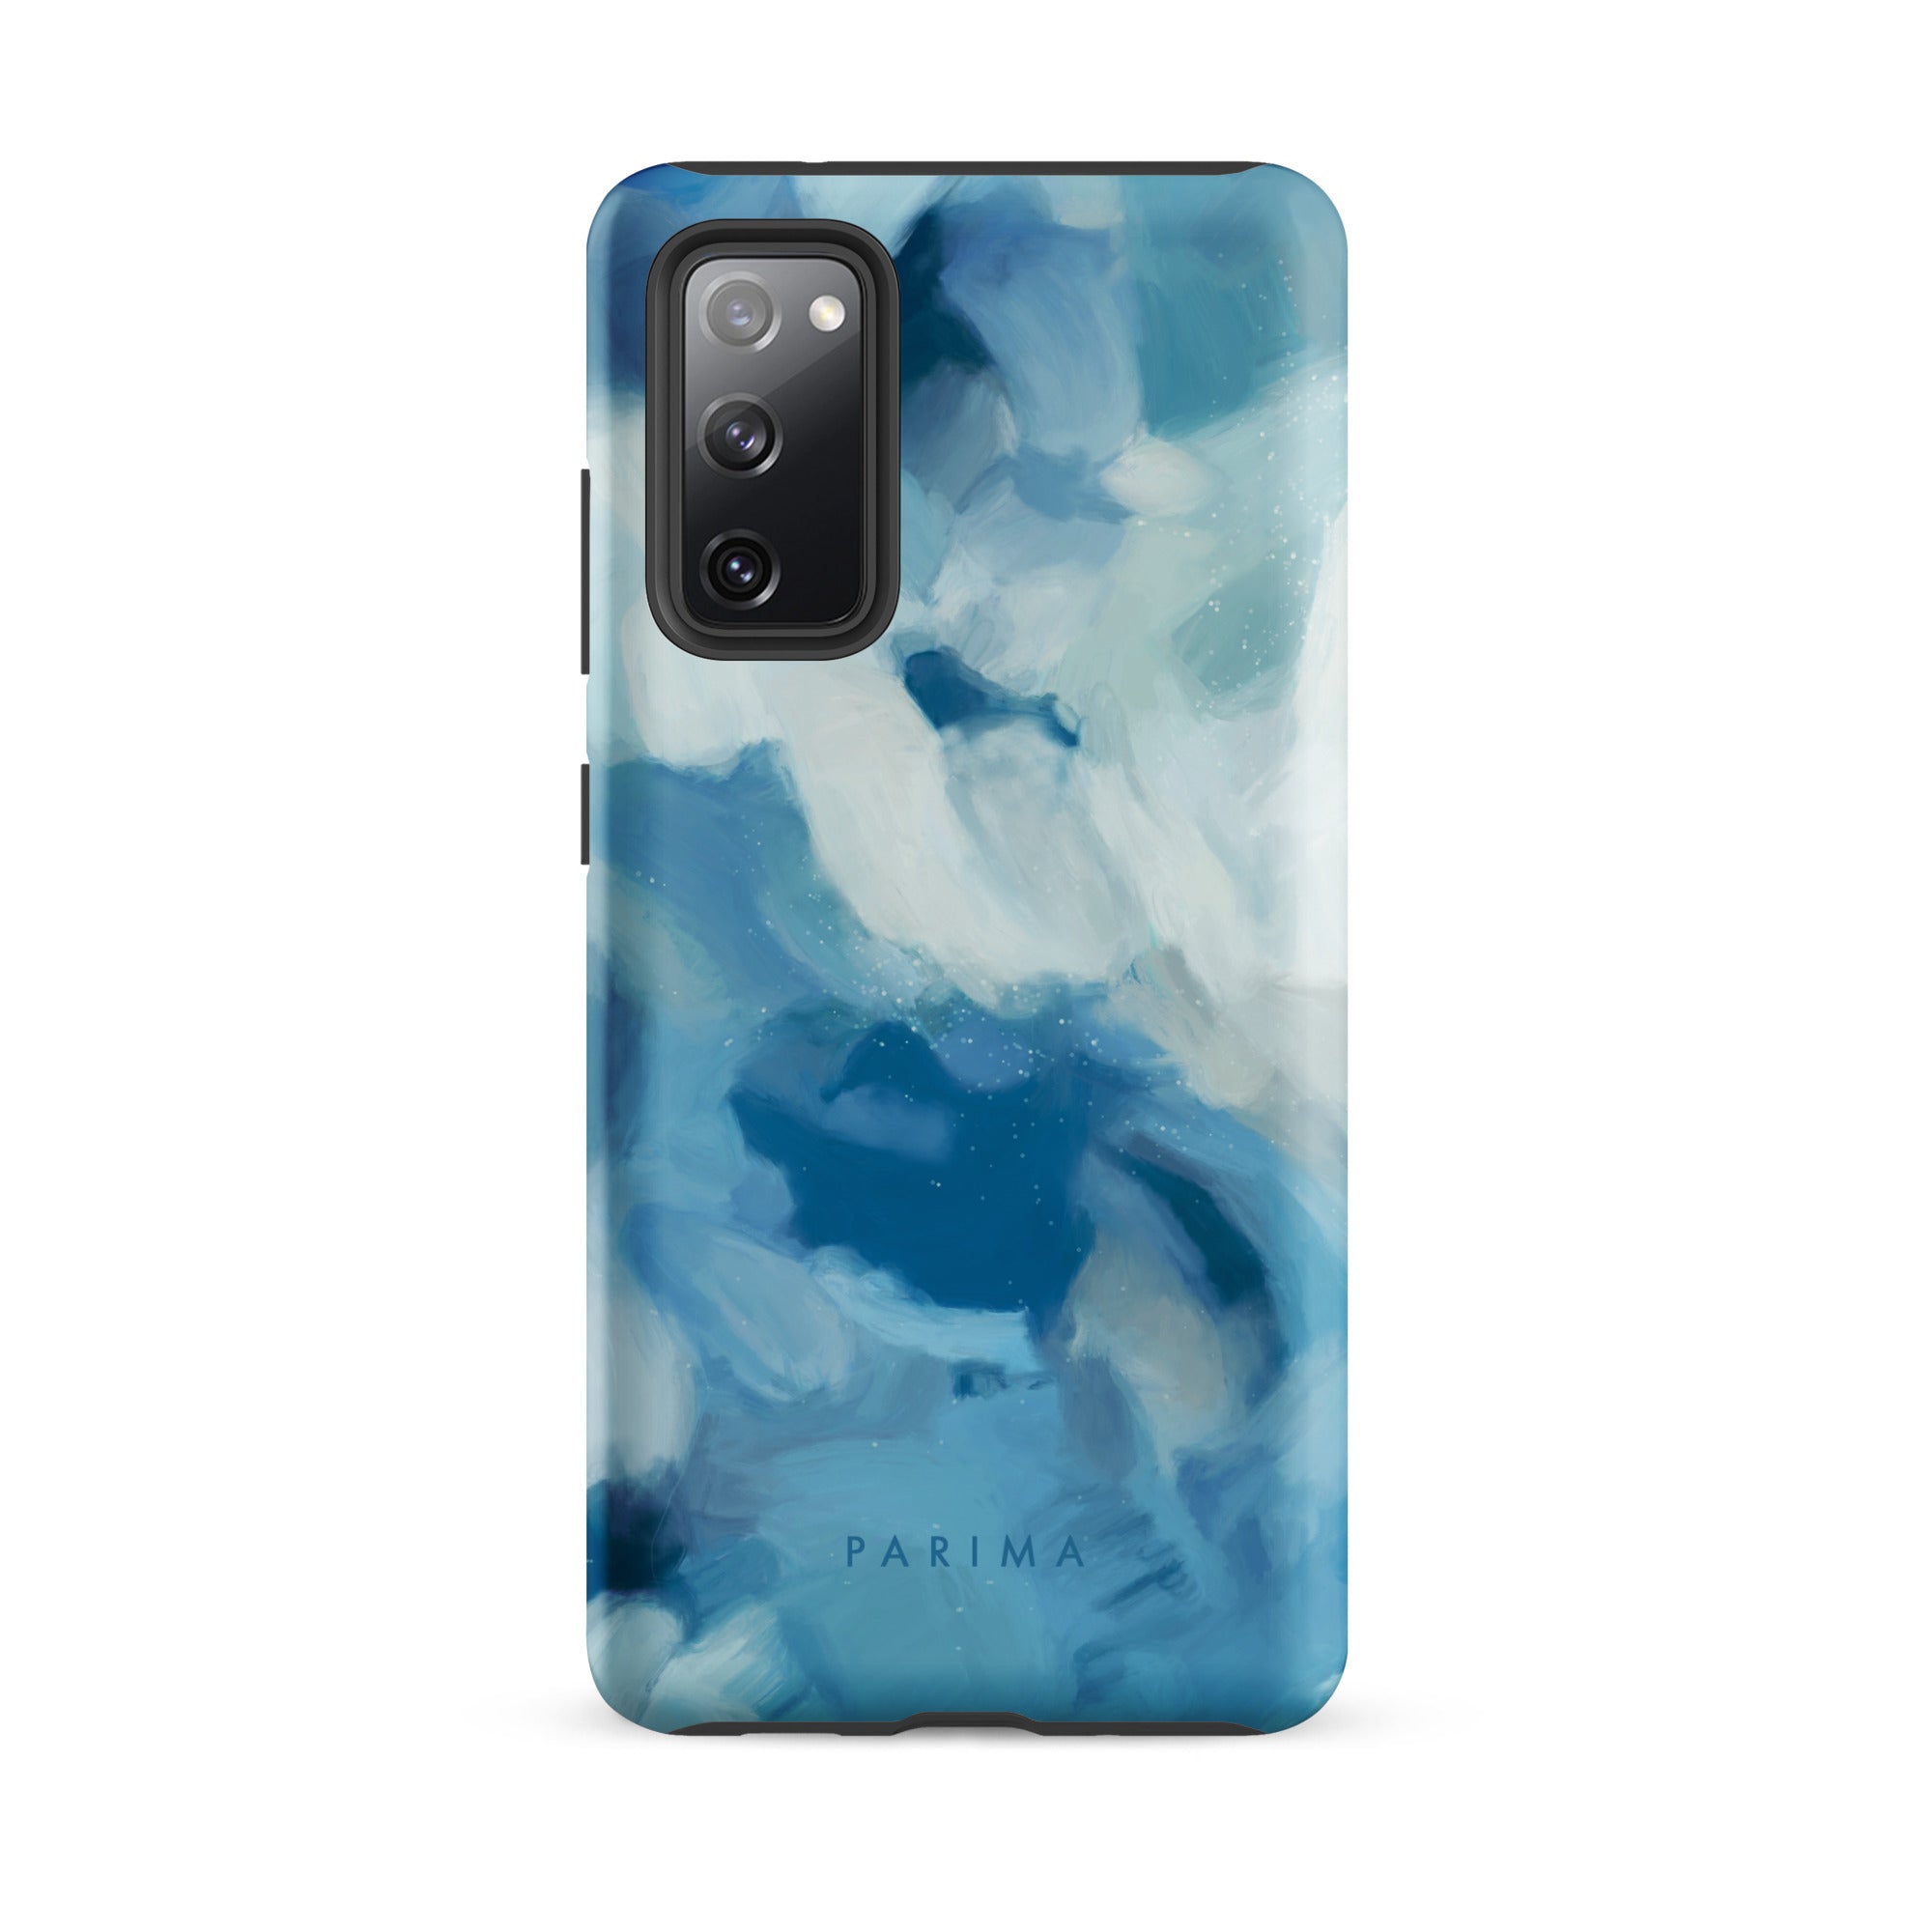 Liviana, blue abstract art on Samsung Galaxy S20 fe tough case by Parima Studio